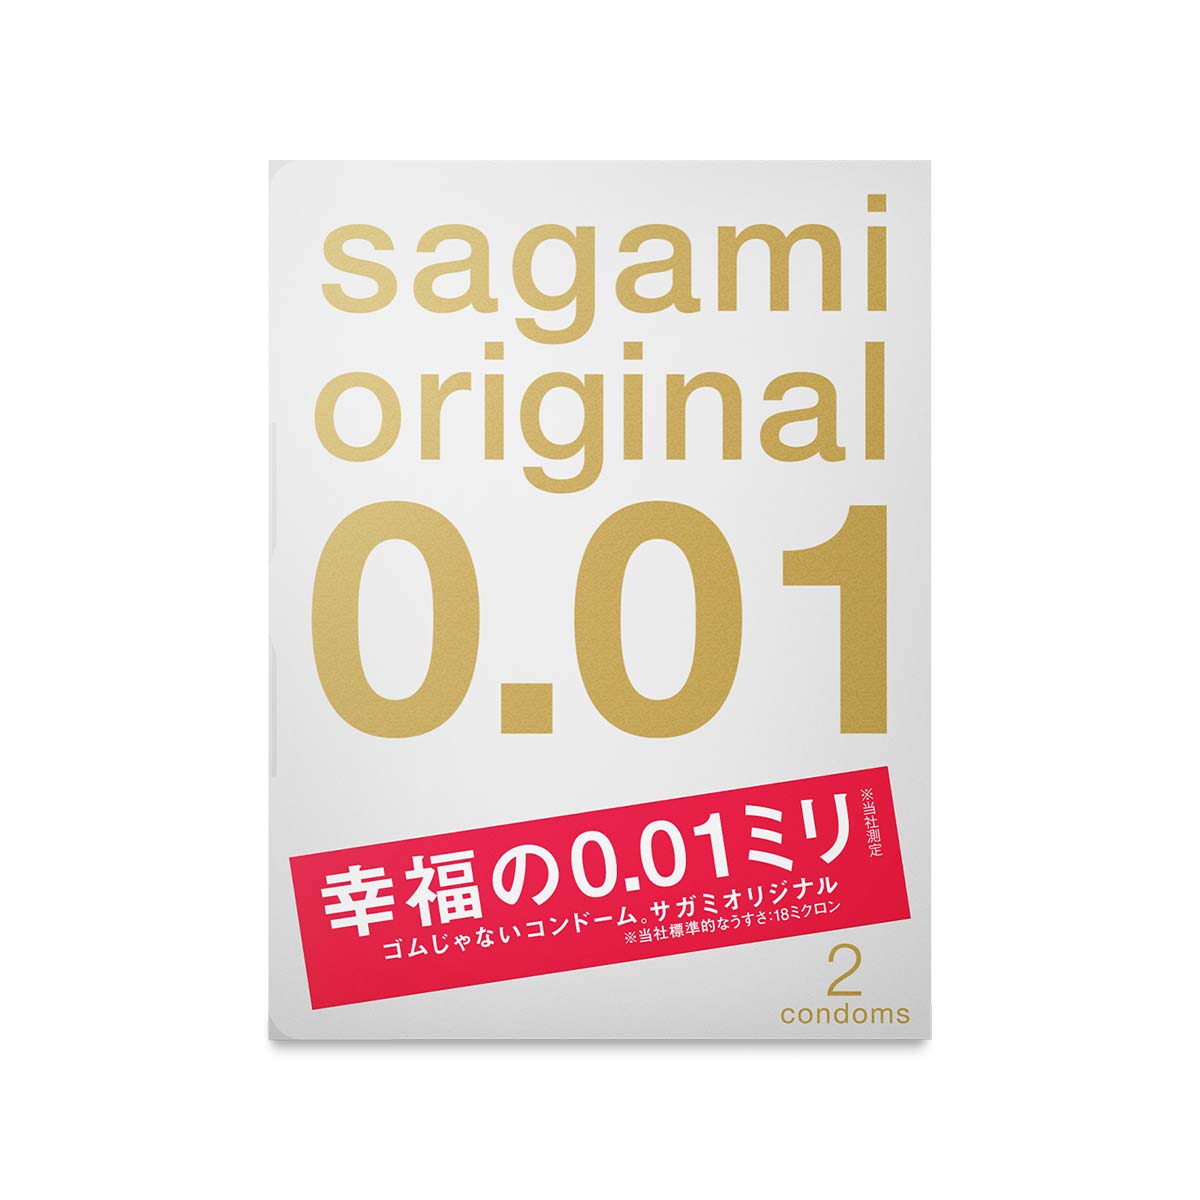 Sagami Original 0.01 2s